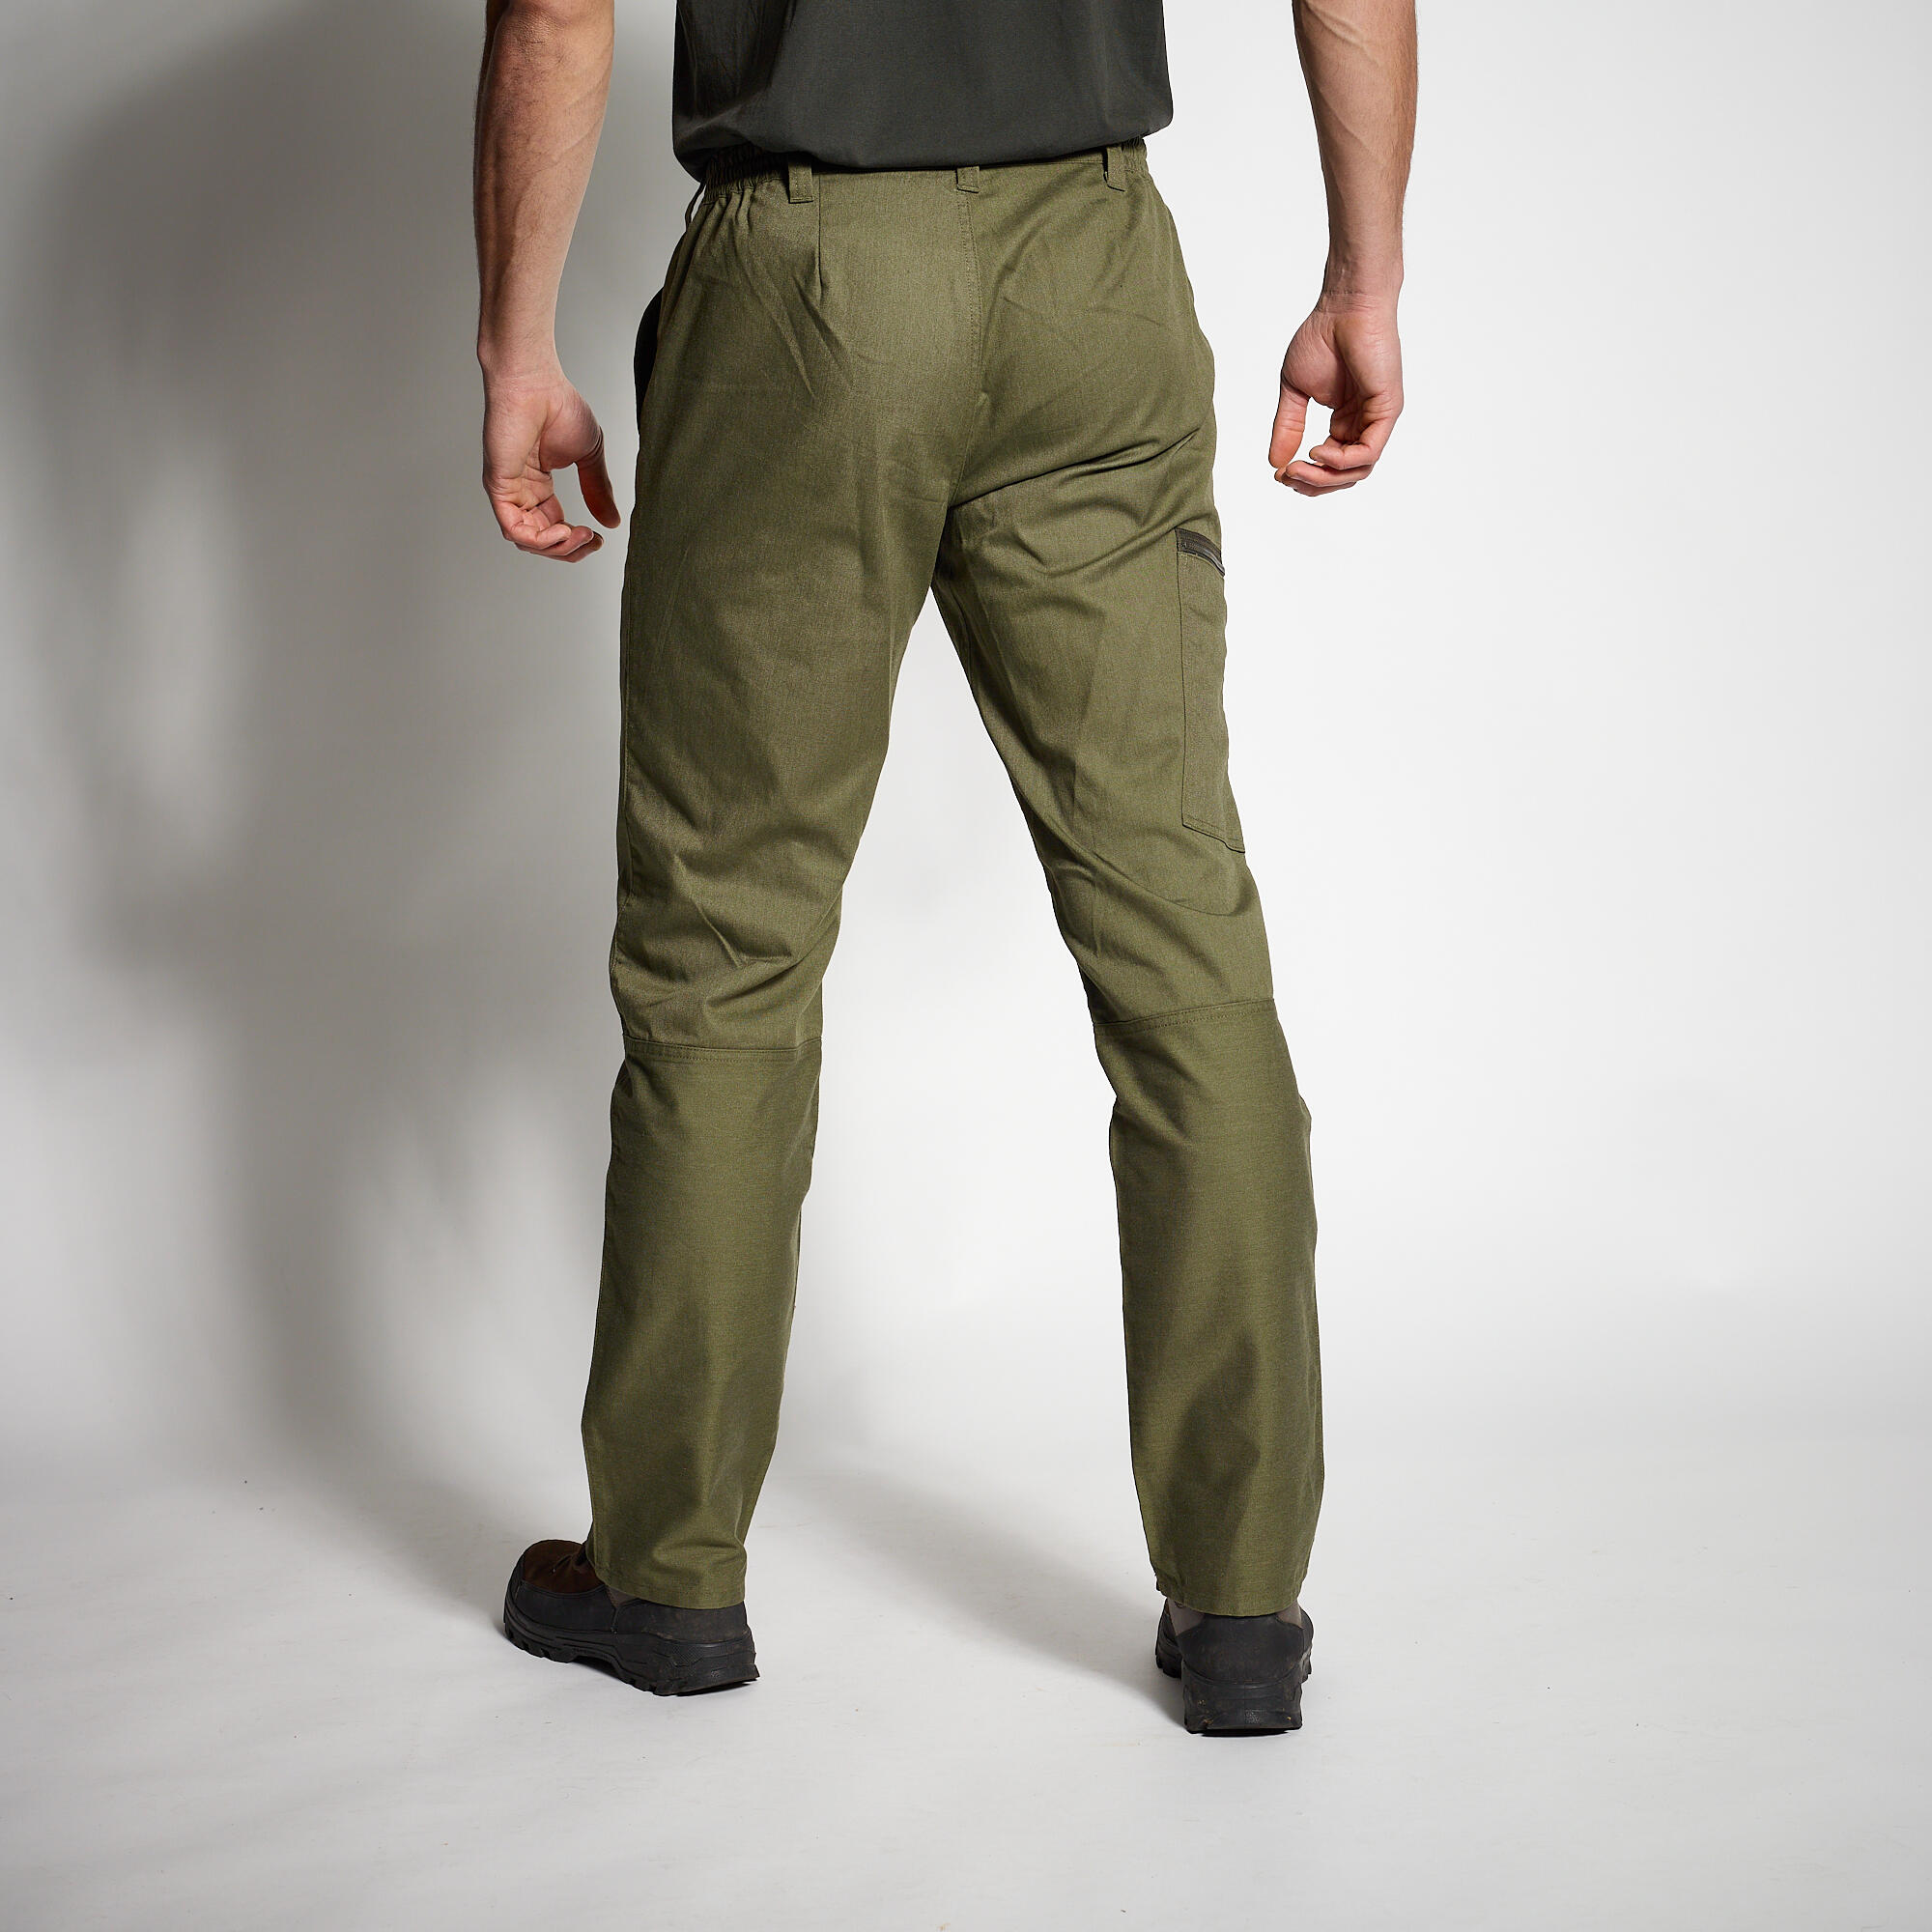 Military Tactical Pants Men Combat Trousers Multi-pocket Training Men Pants  | eBay